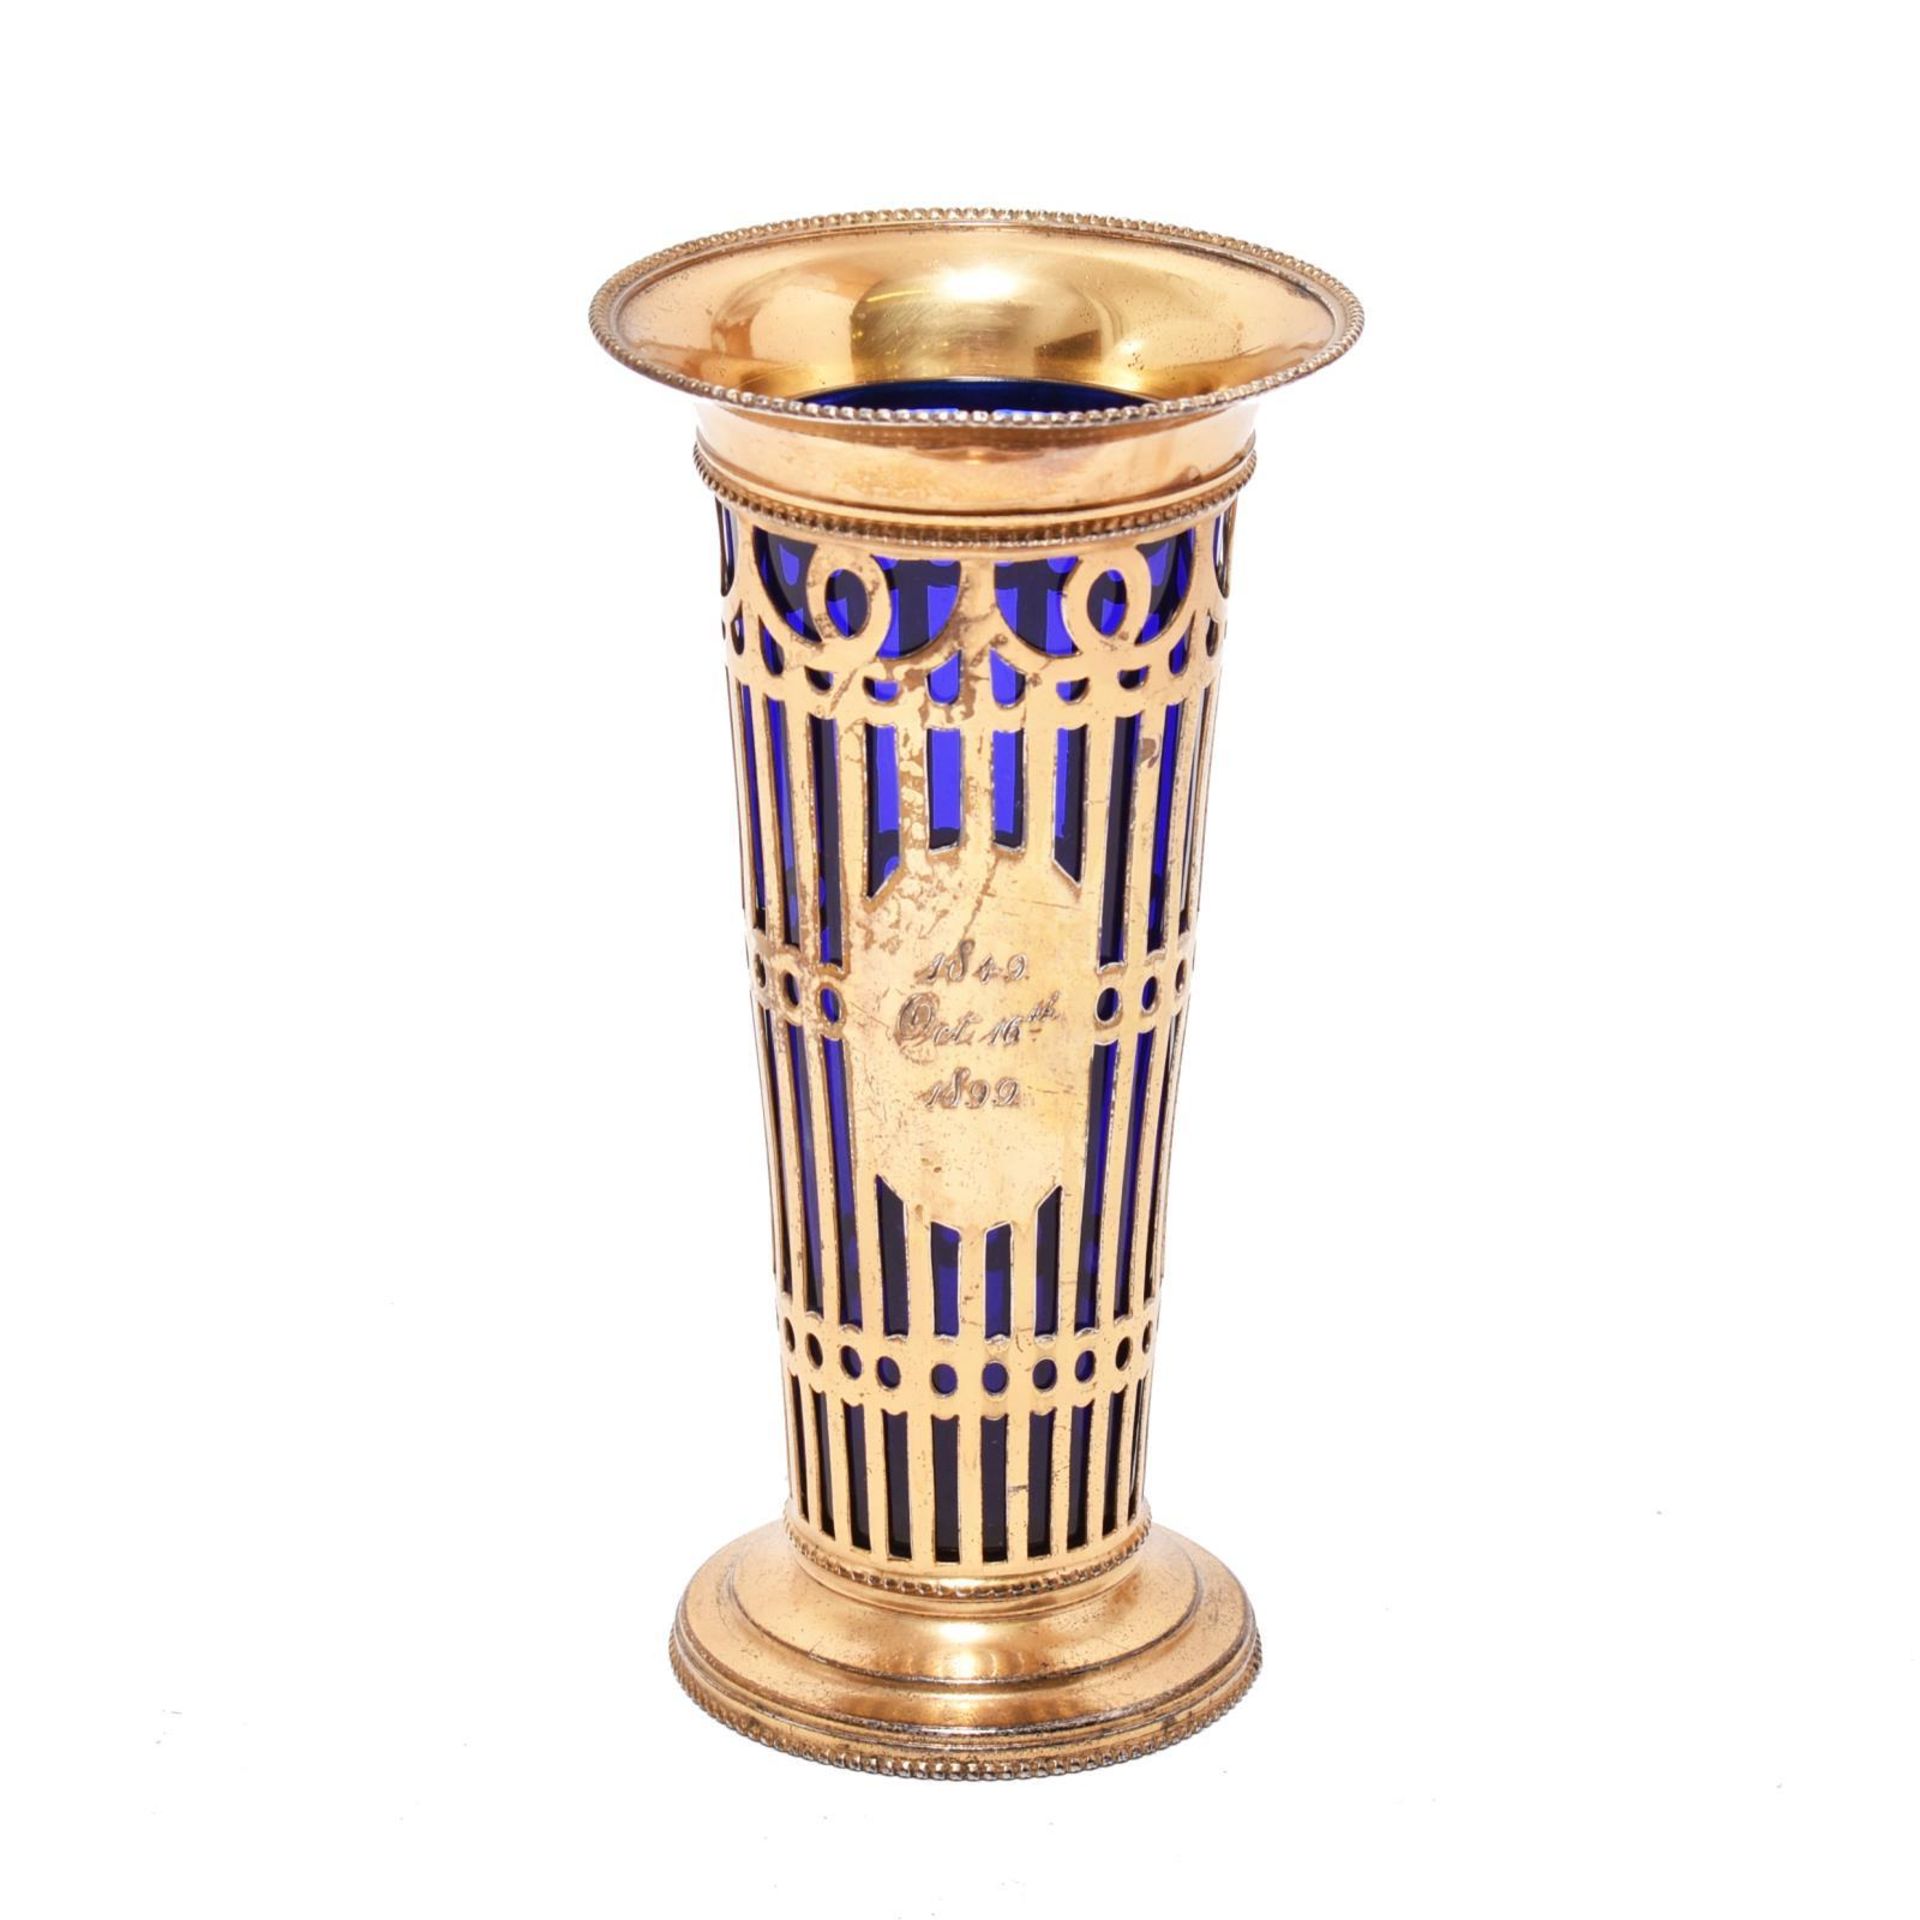 Vase. Wohl USA, 19. Jh. | Silber, vergoldet, blaues Glas. - Image 2 of 4